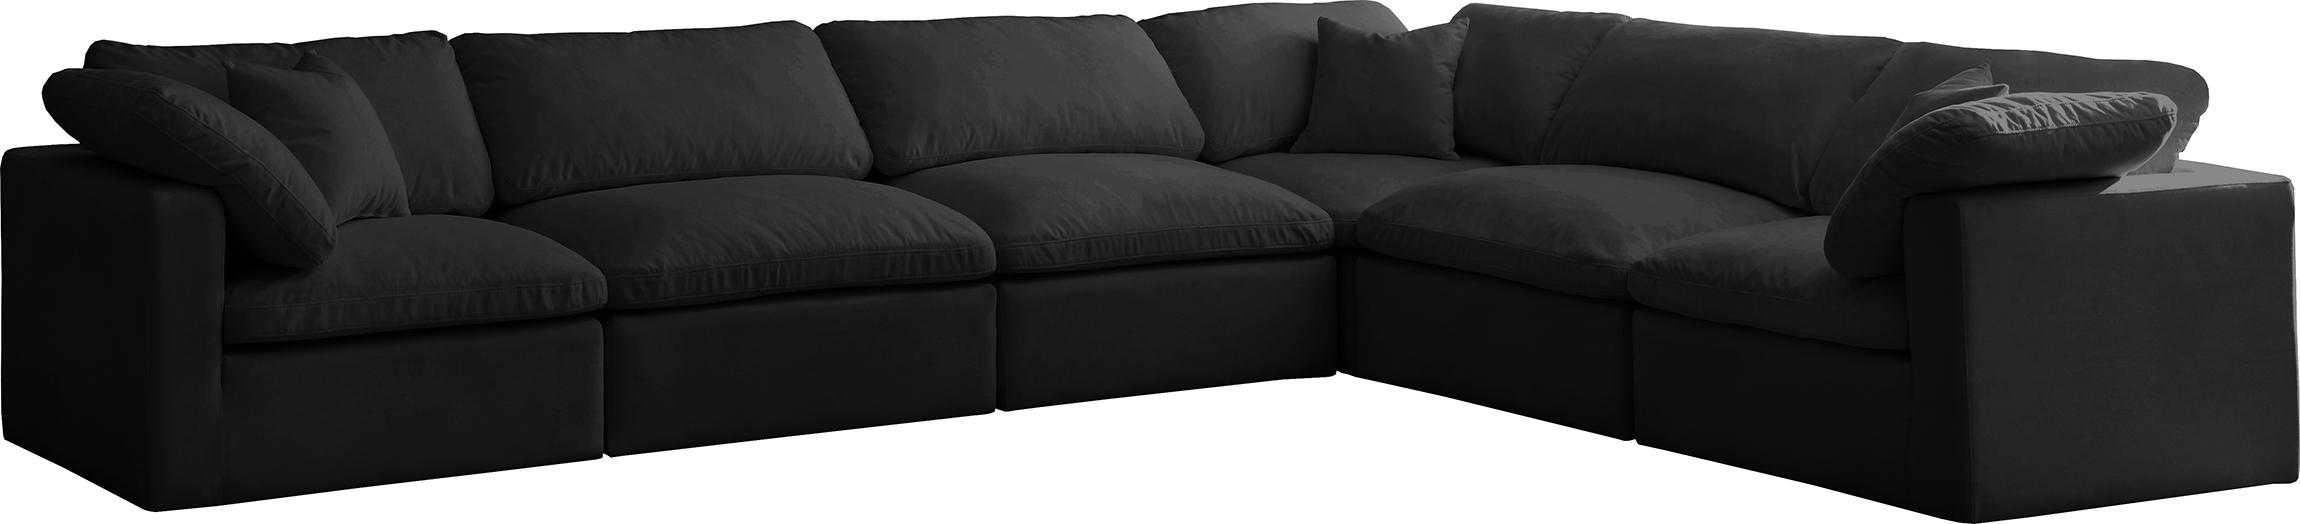 Contemporary, Modern Modular Sectional Sofa 602Black-Sec6A 602Black-Sec6A in Black Fabric